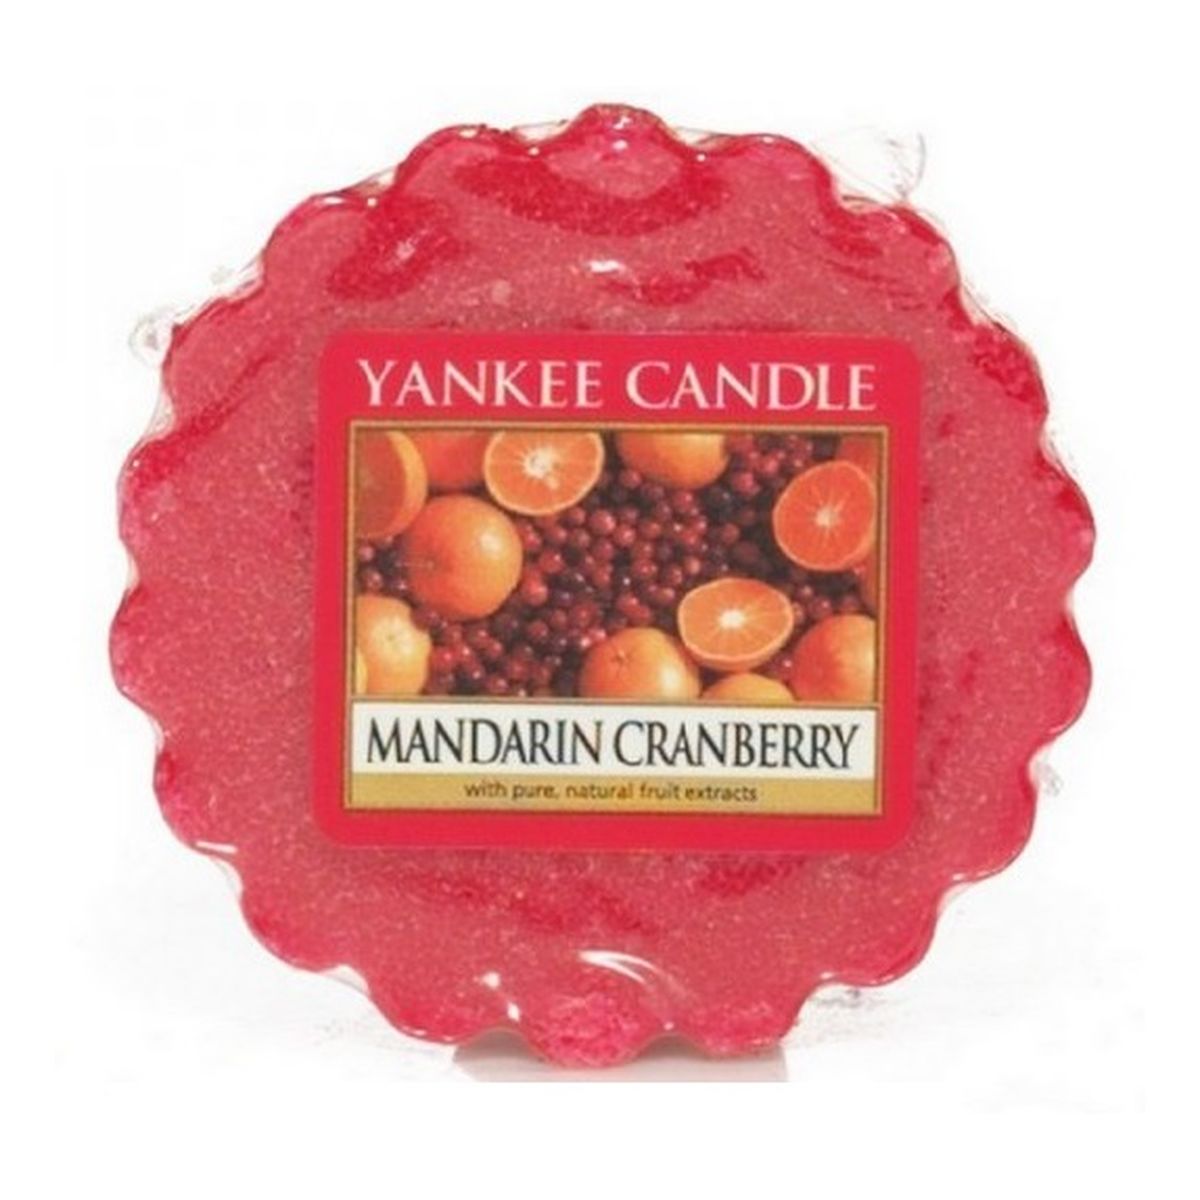 Yankee Candle Wax wosk zapachowy Mandarin Cranberry 22g